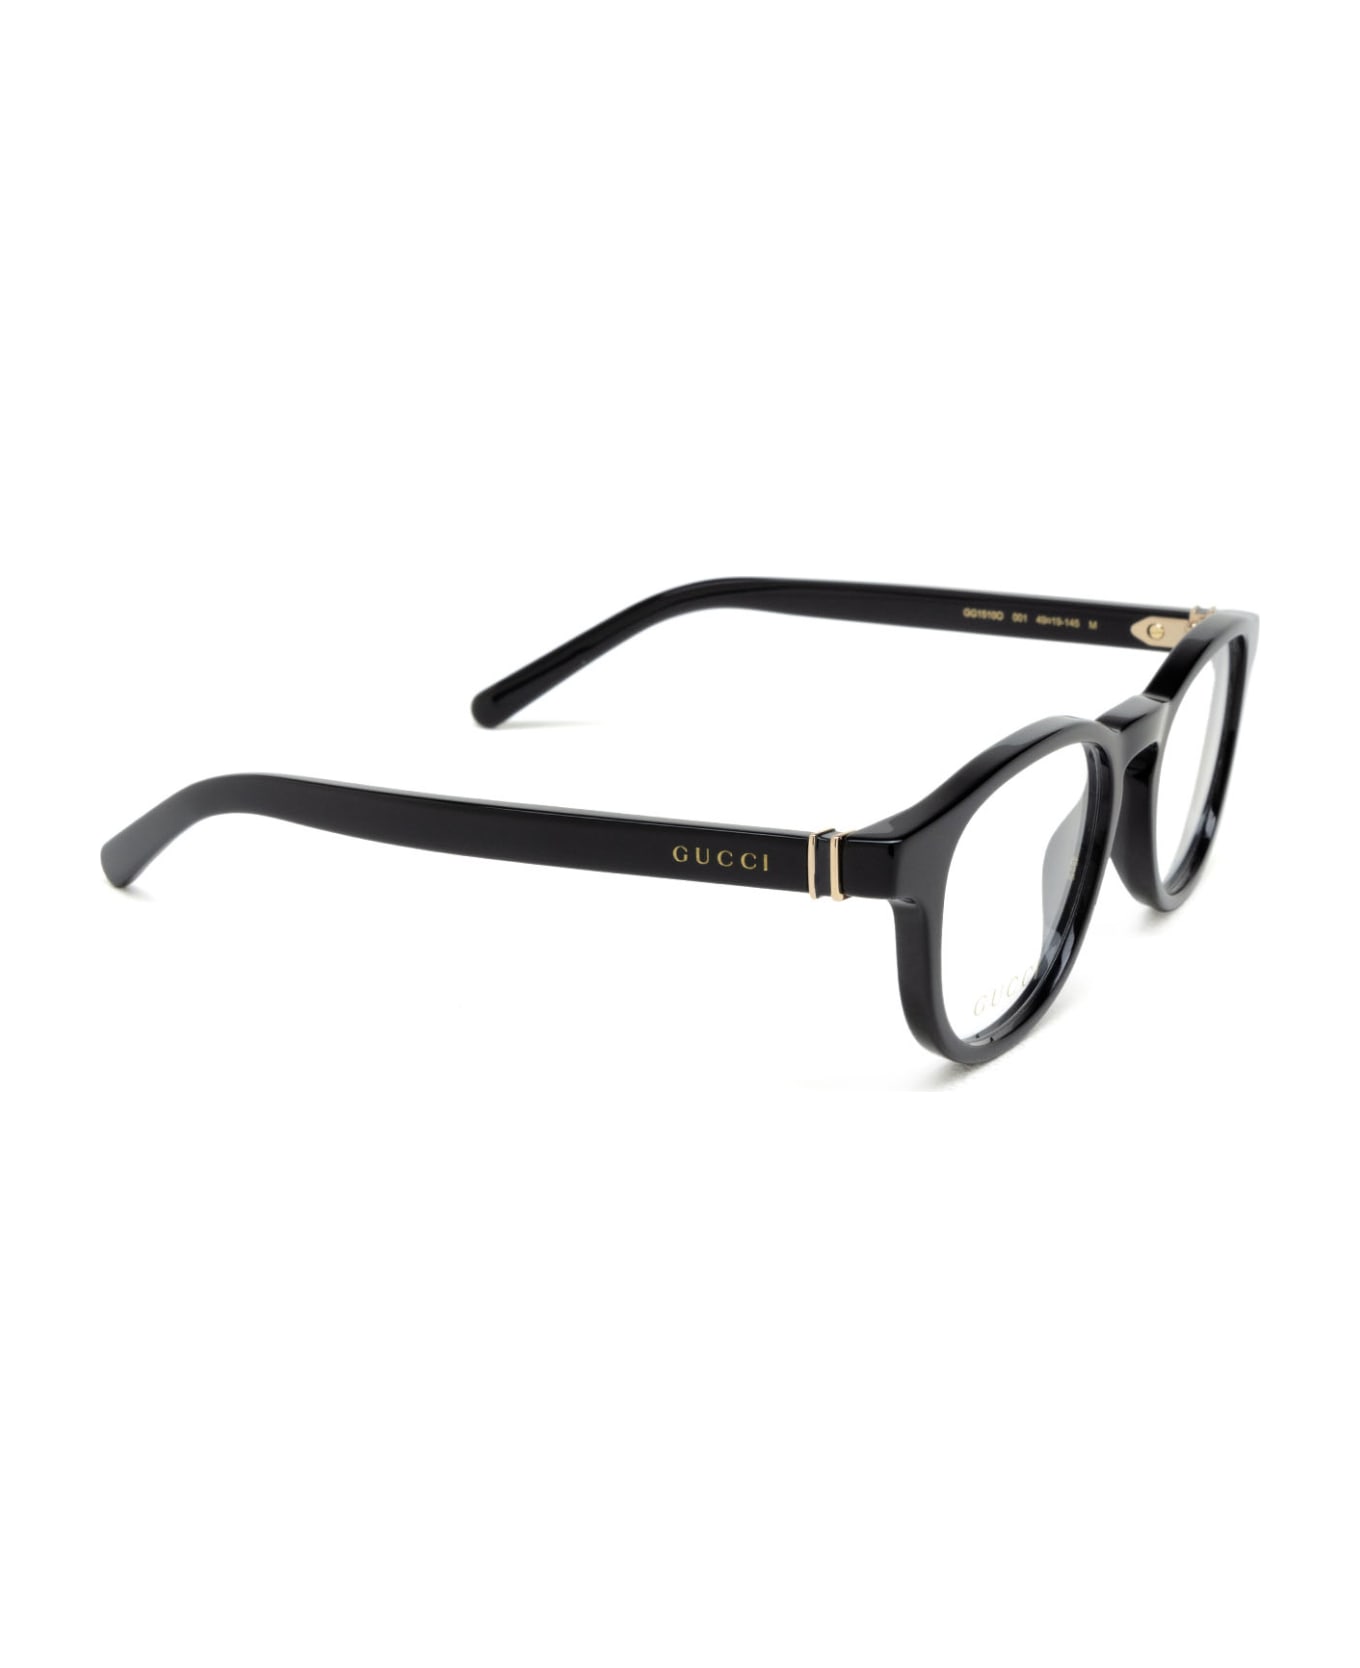 Gucci Eyewear Gg1510o Black Glasses - Black